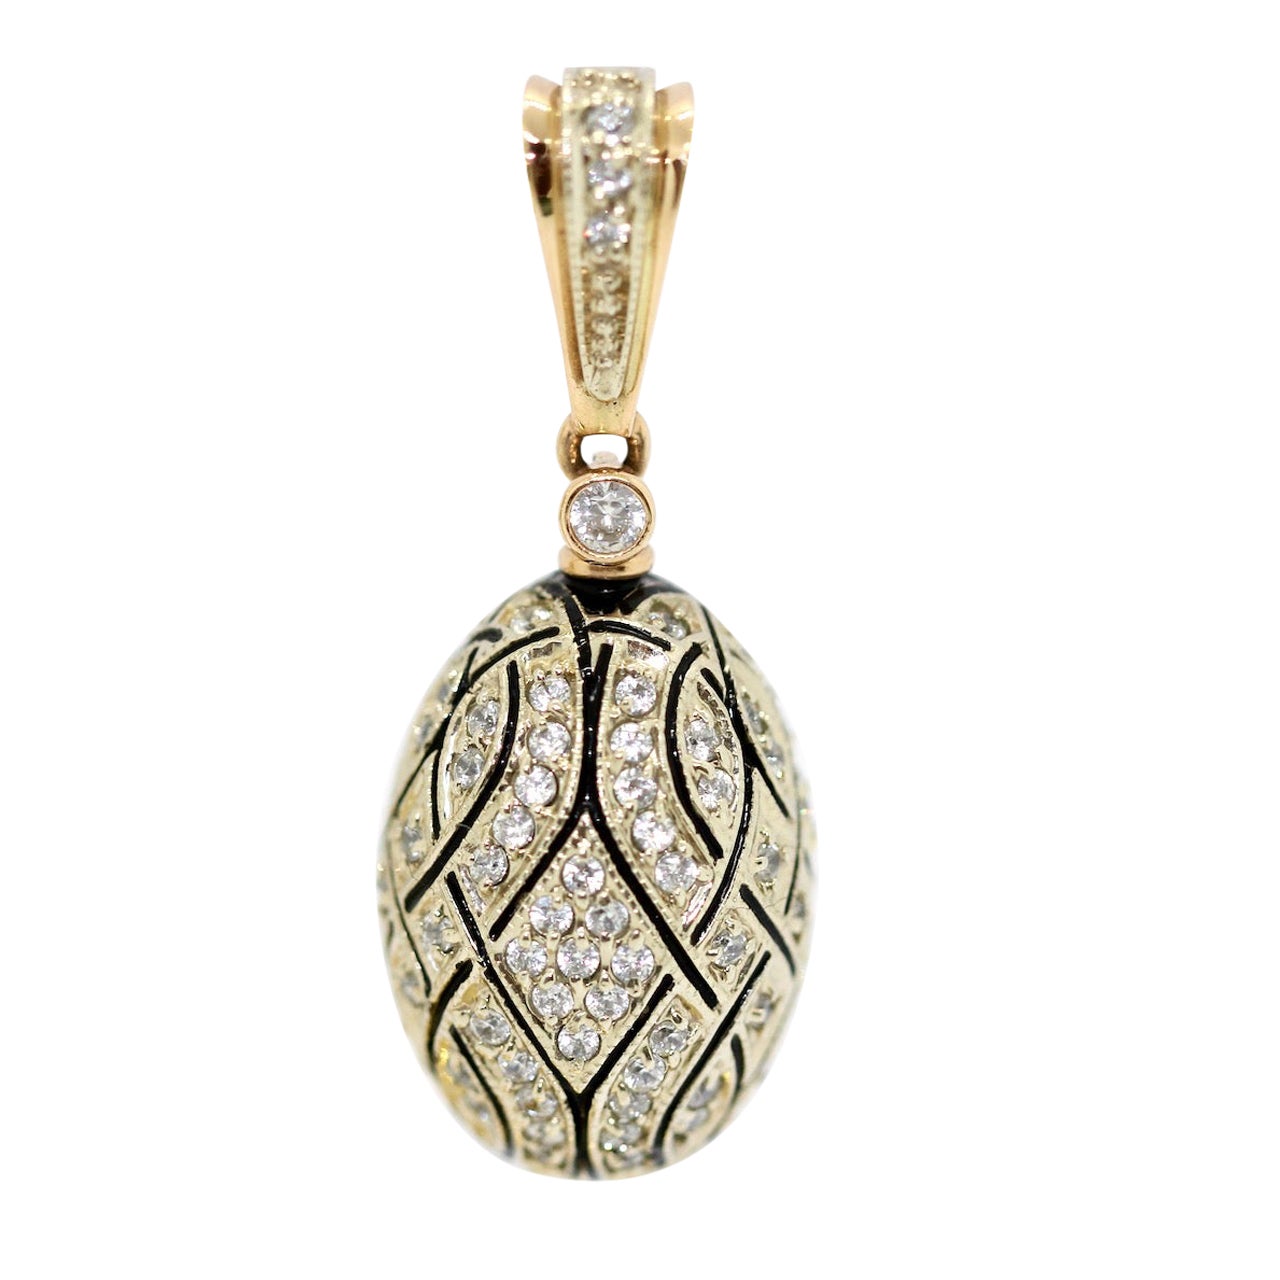 Diamond and Enamel Pendant, Enhancer, 14k Rose Gold, Design of Faberge Eggs